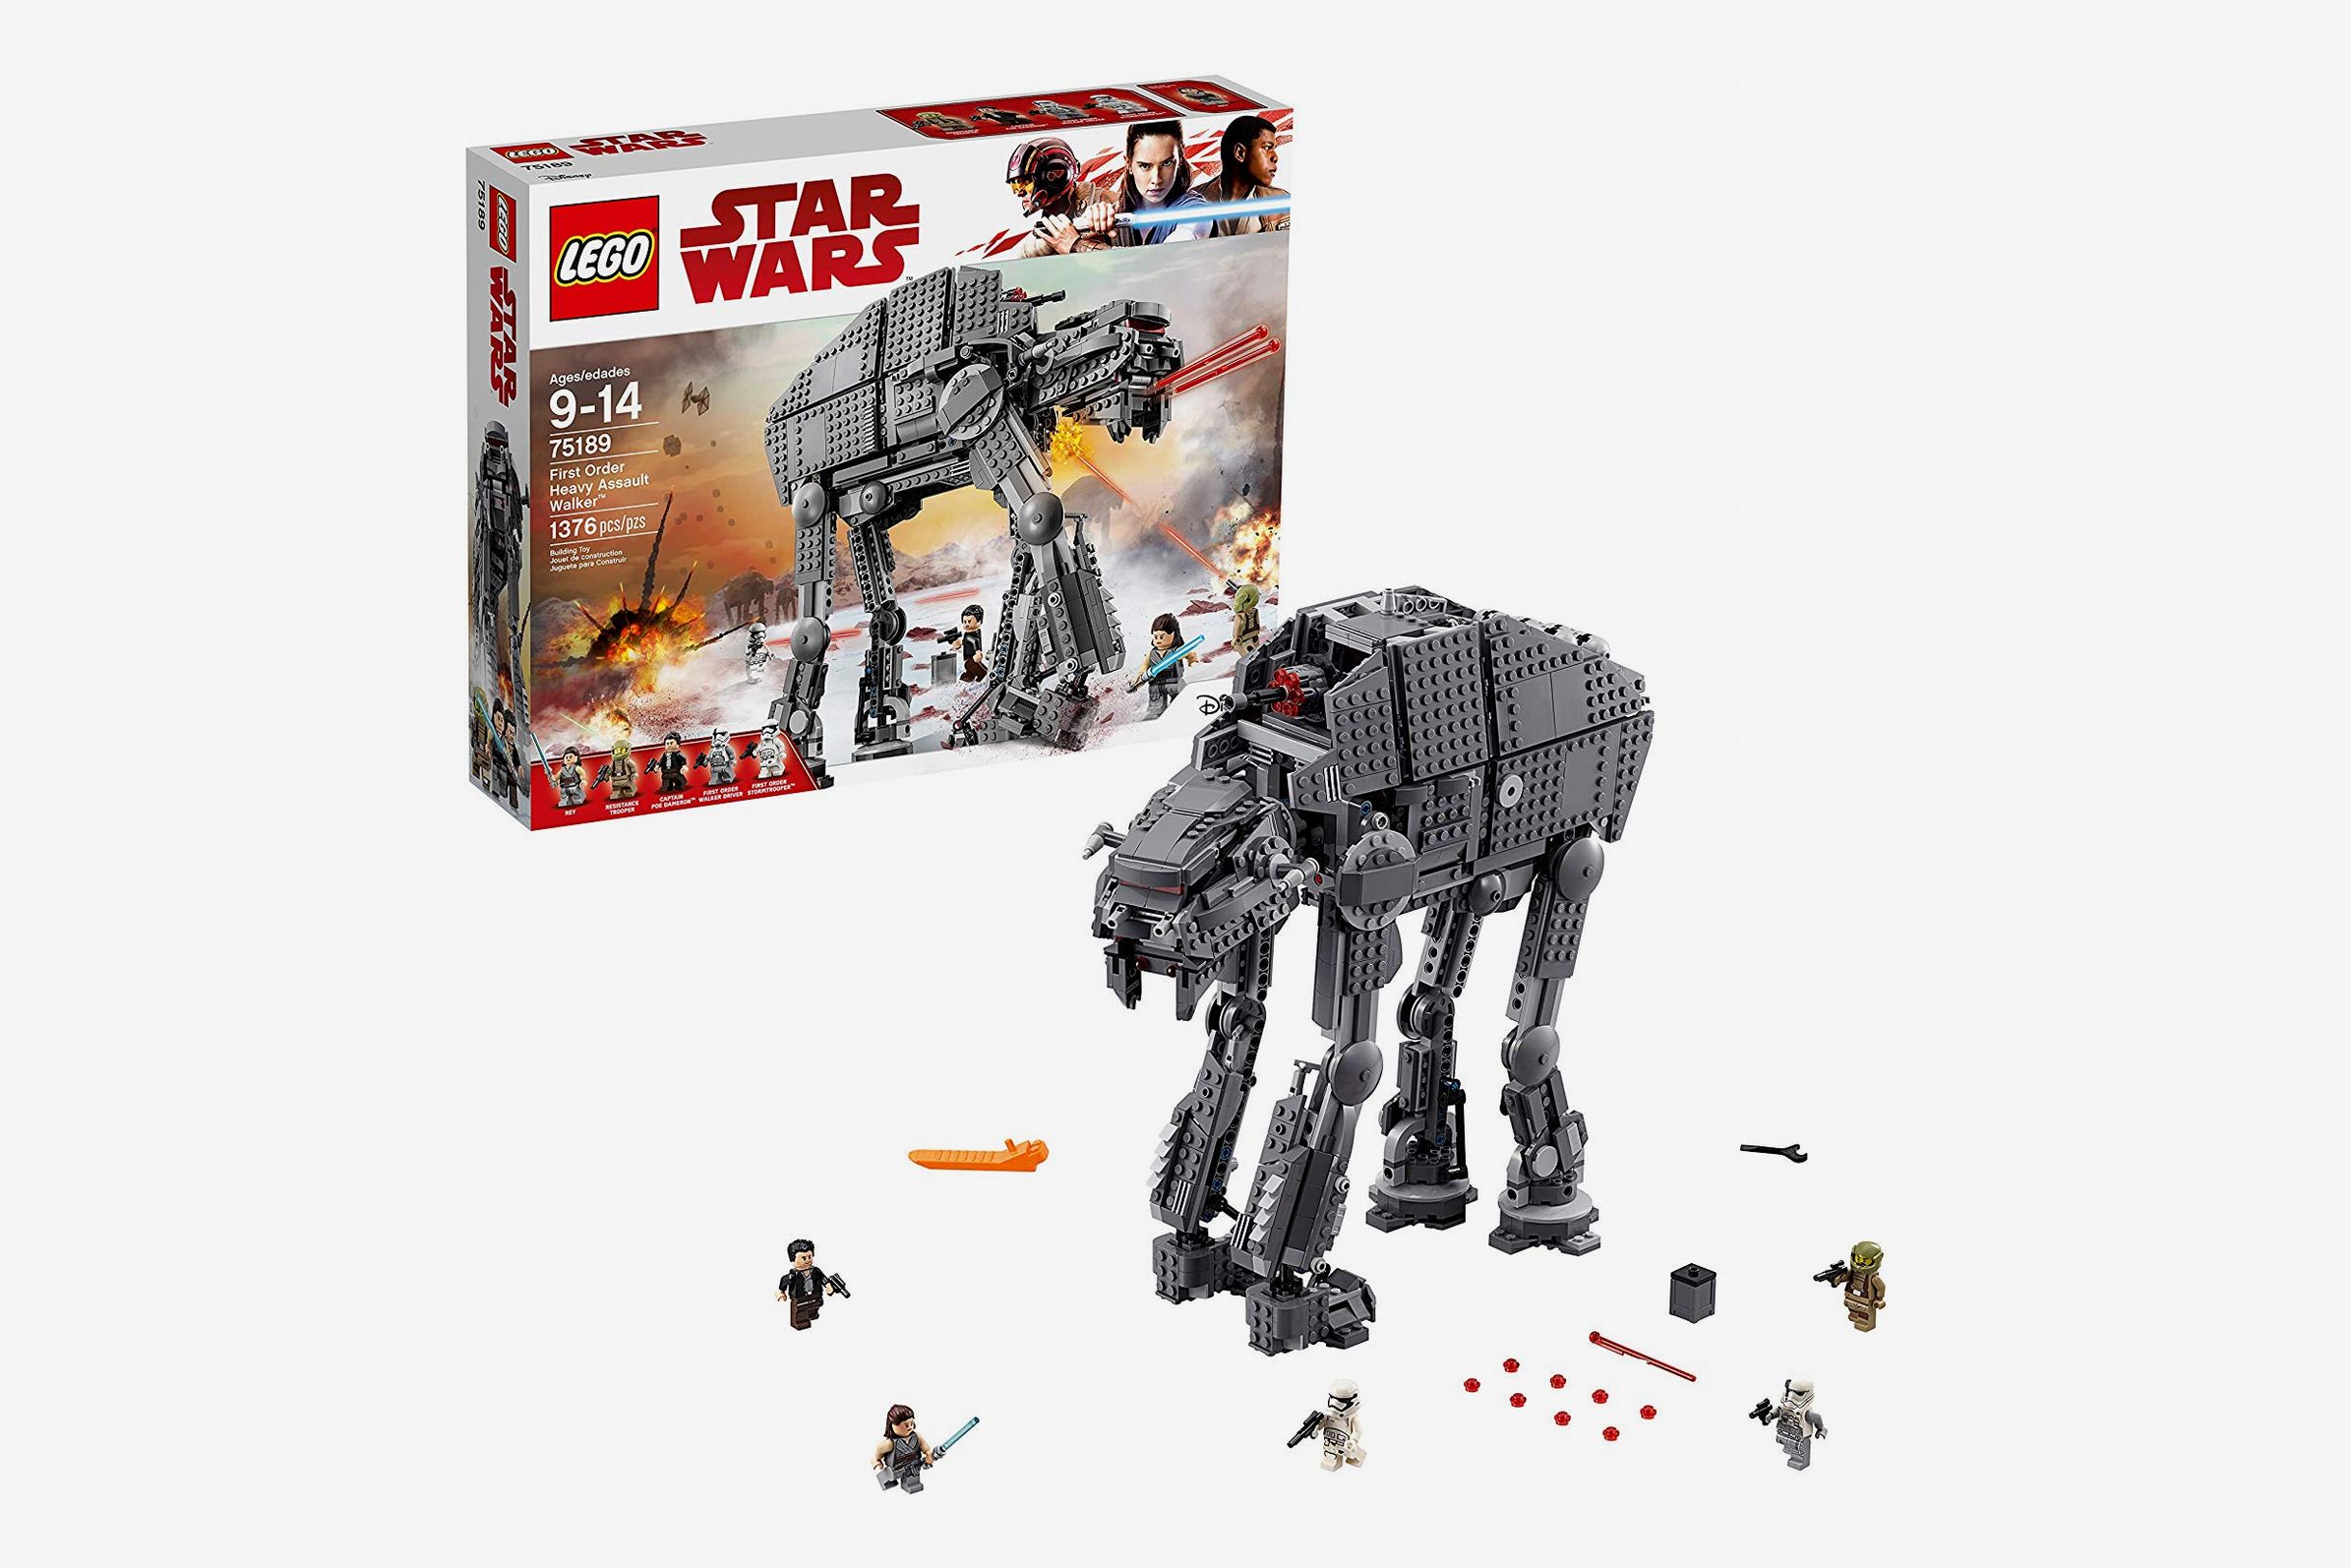 11 Best Star Wars Toys 2019 The, Lego Star Wars Shower Curtain